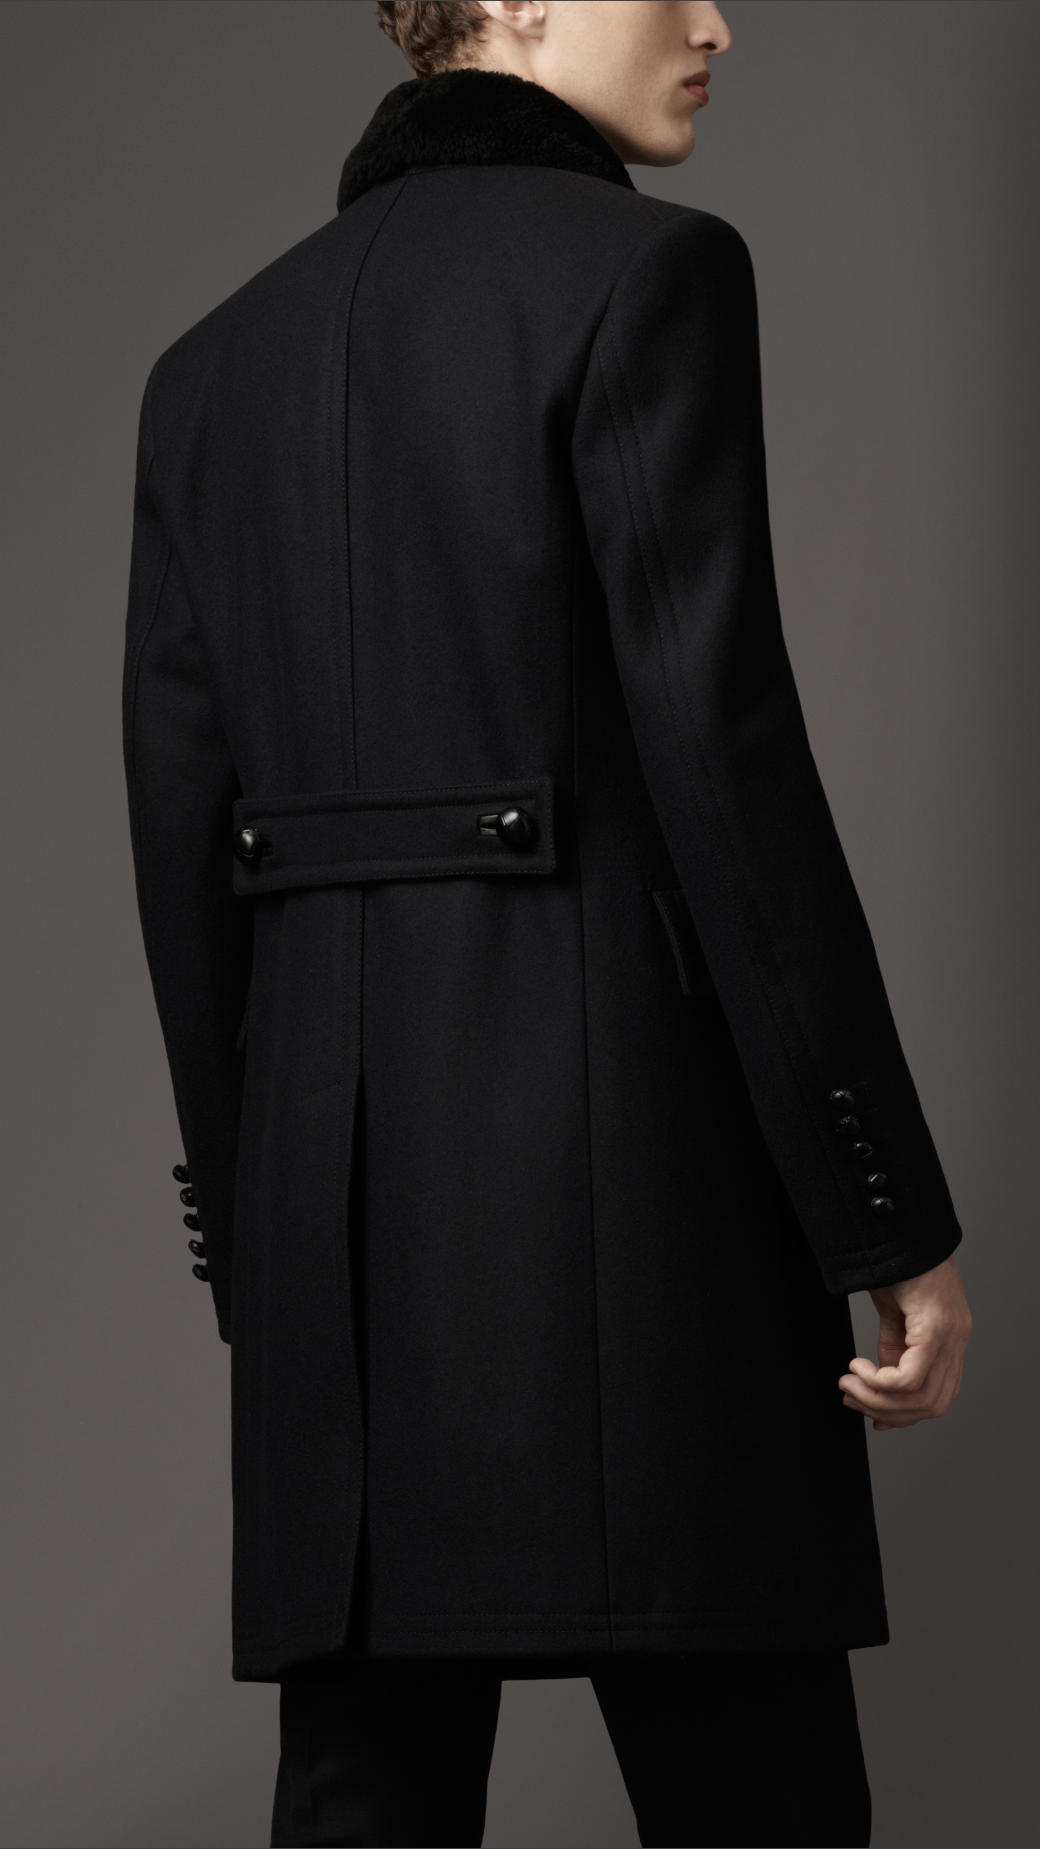 Lyst - Burberry Shearling Collar Top Coat in Black for Men